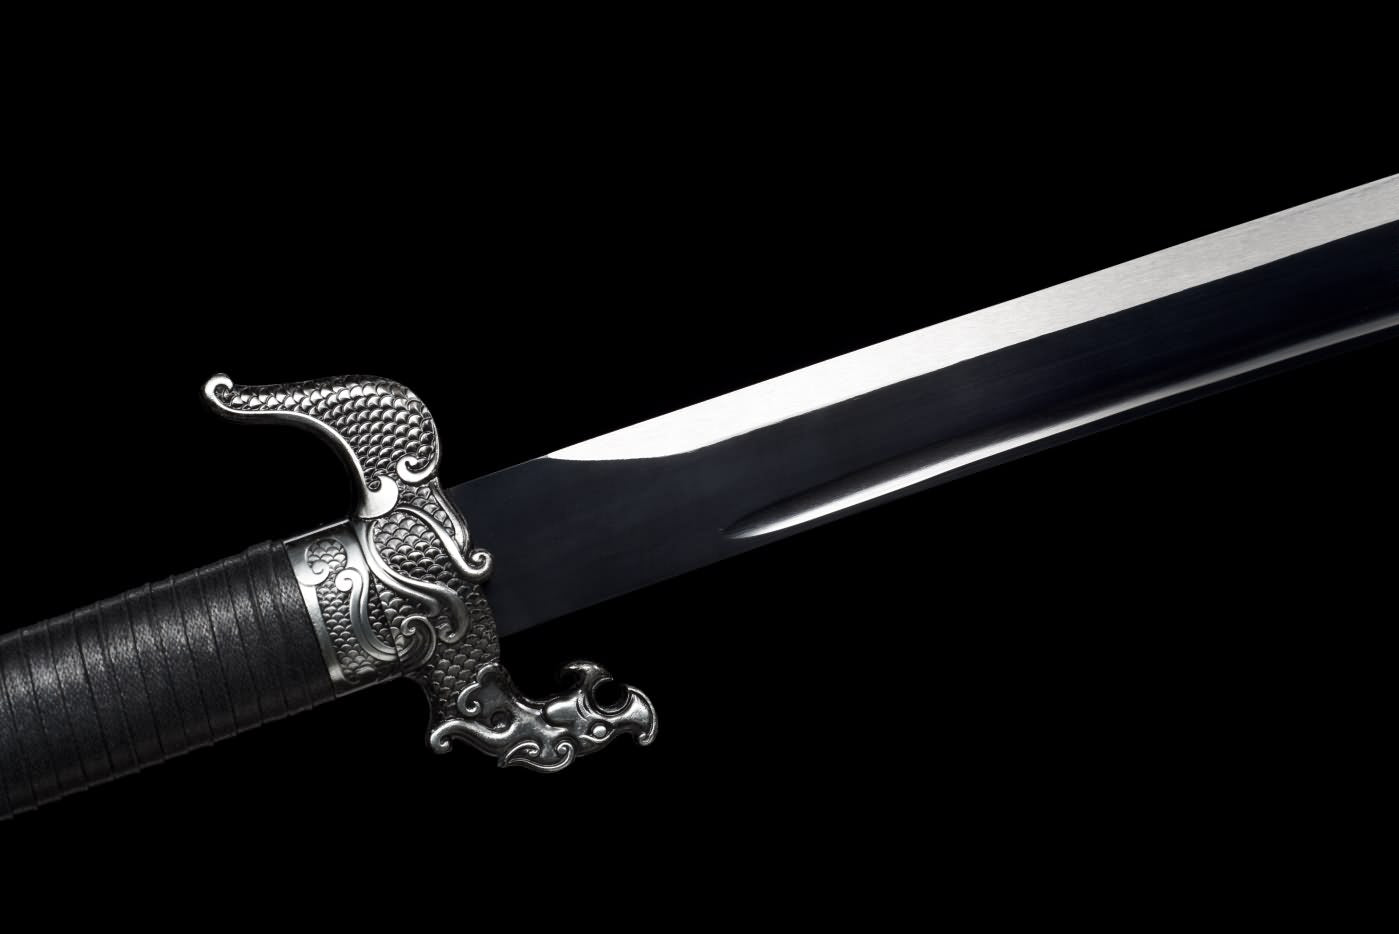 Da dao Sword Real,Battle Ready,High Carbon Steel Blade,Dragon Handle,LOONGSWORD